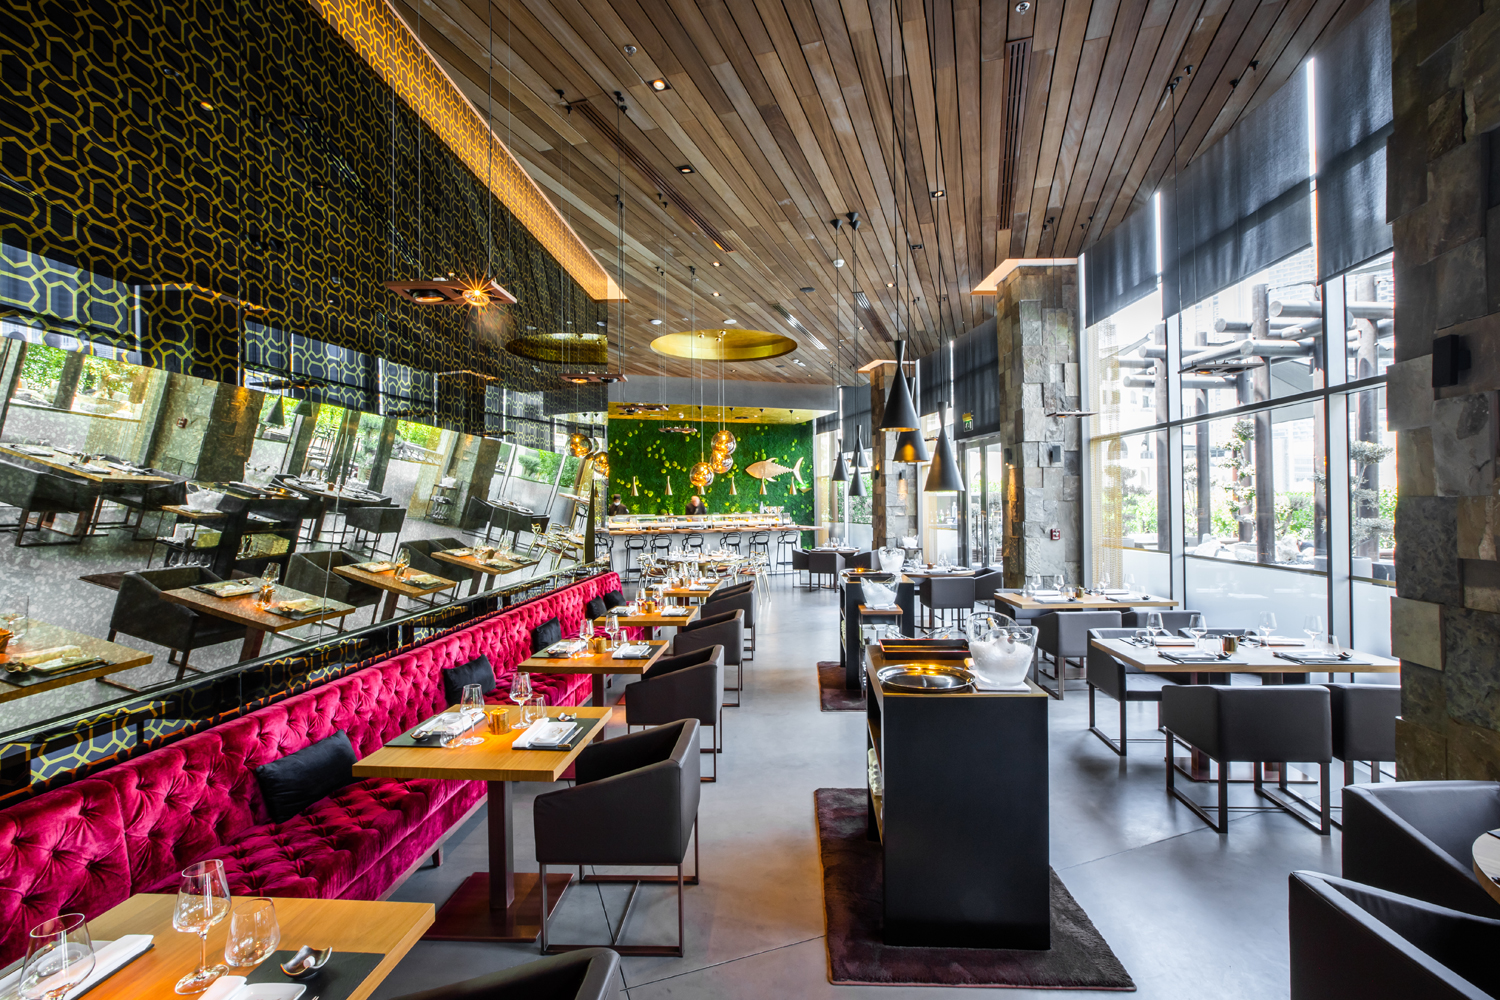 99 Sushi Bar opens in Dubai | Restaurants | Time Out Dubai